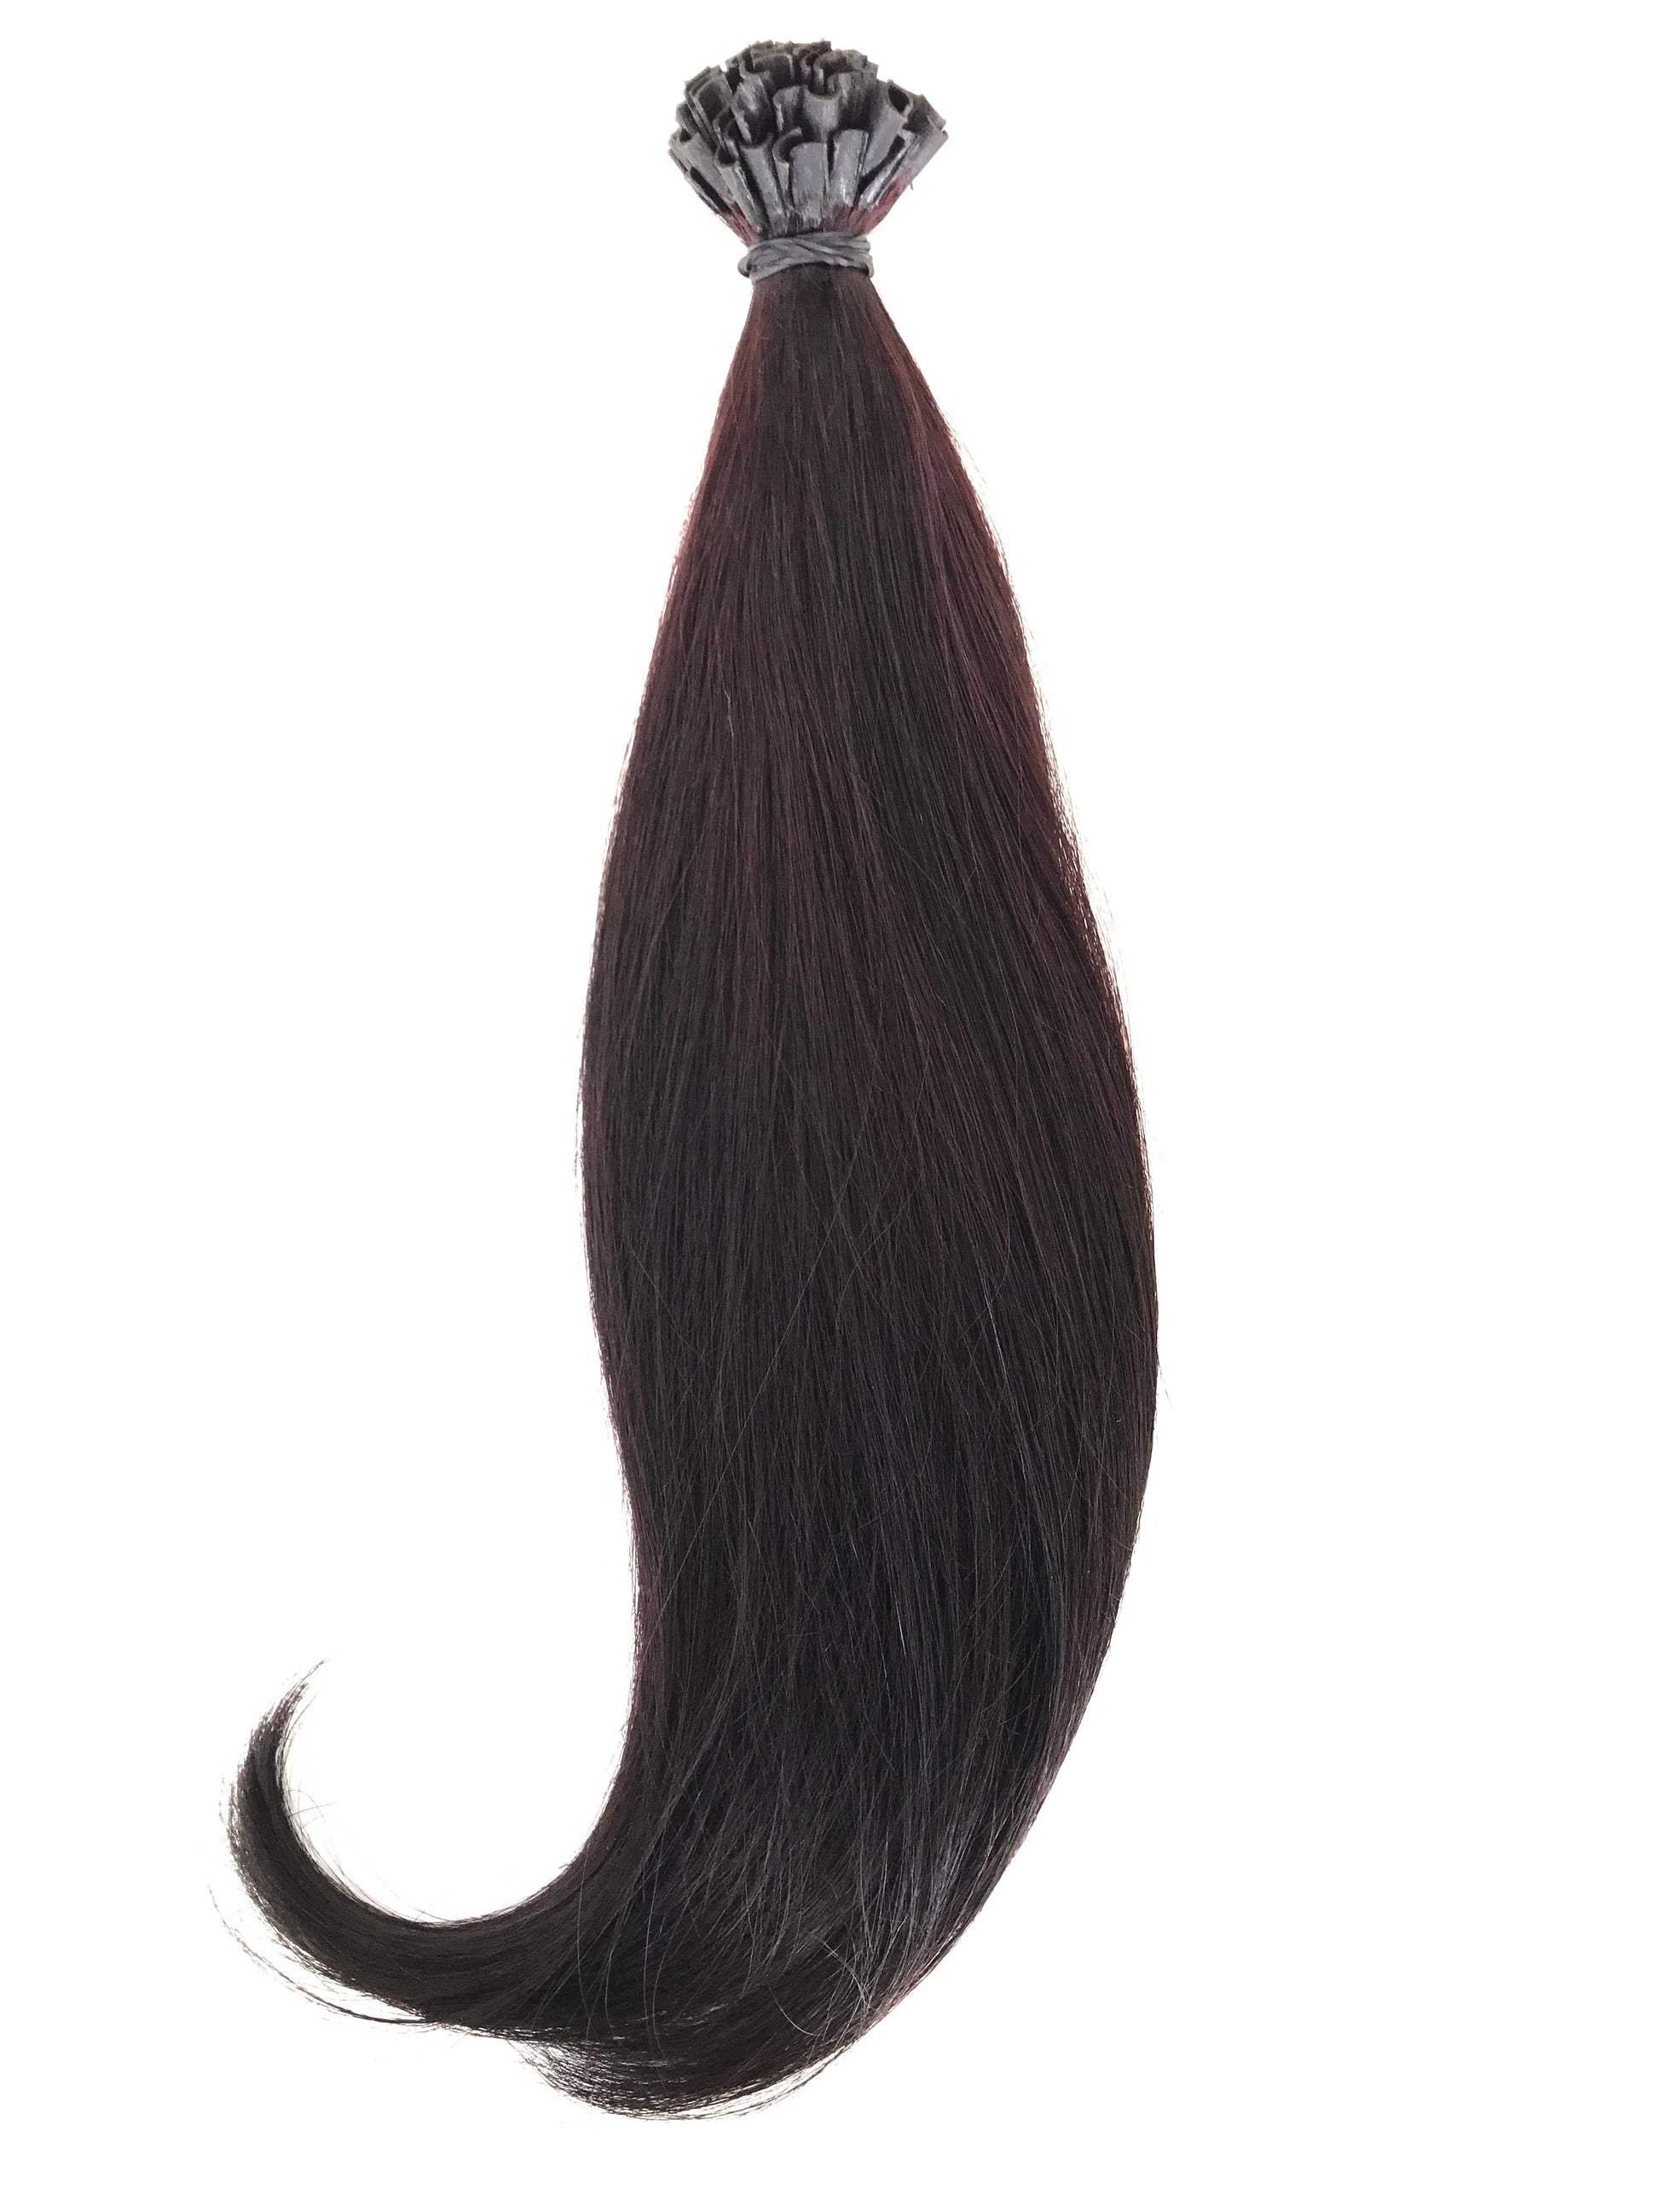 Brazilian Virgin Remy Human Hair, Nail-Tips, Straight, 16'', Plum, Black, Quick Shipping!-Virgin Hair & Beauty, The Best Hair Extensions, Real Virgin Human Hair.